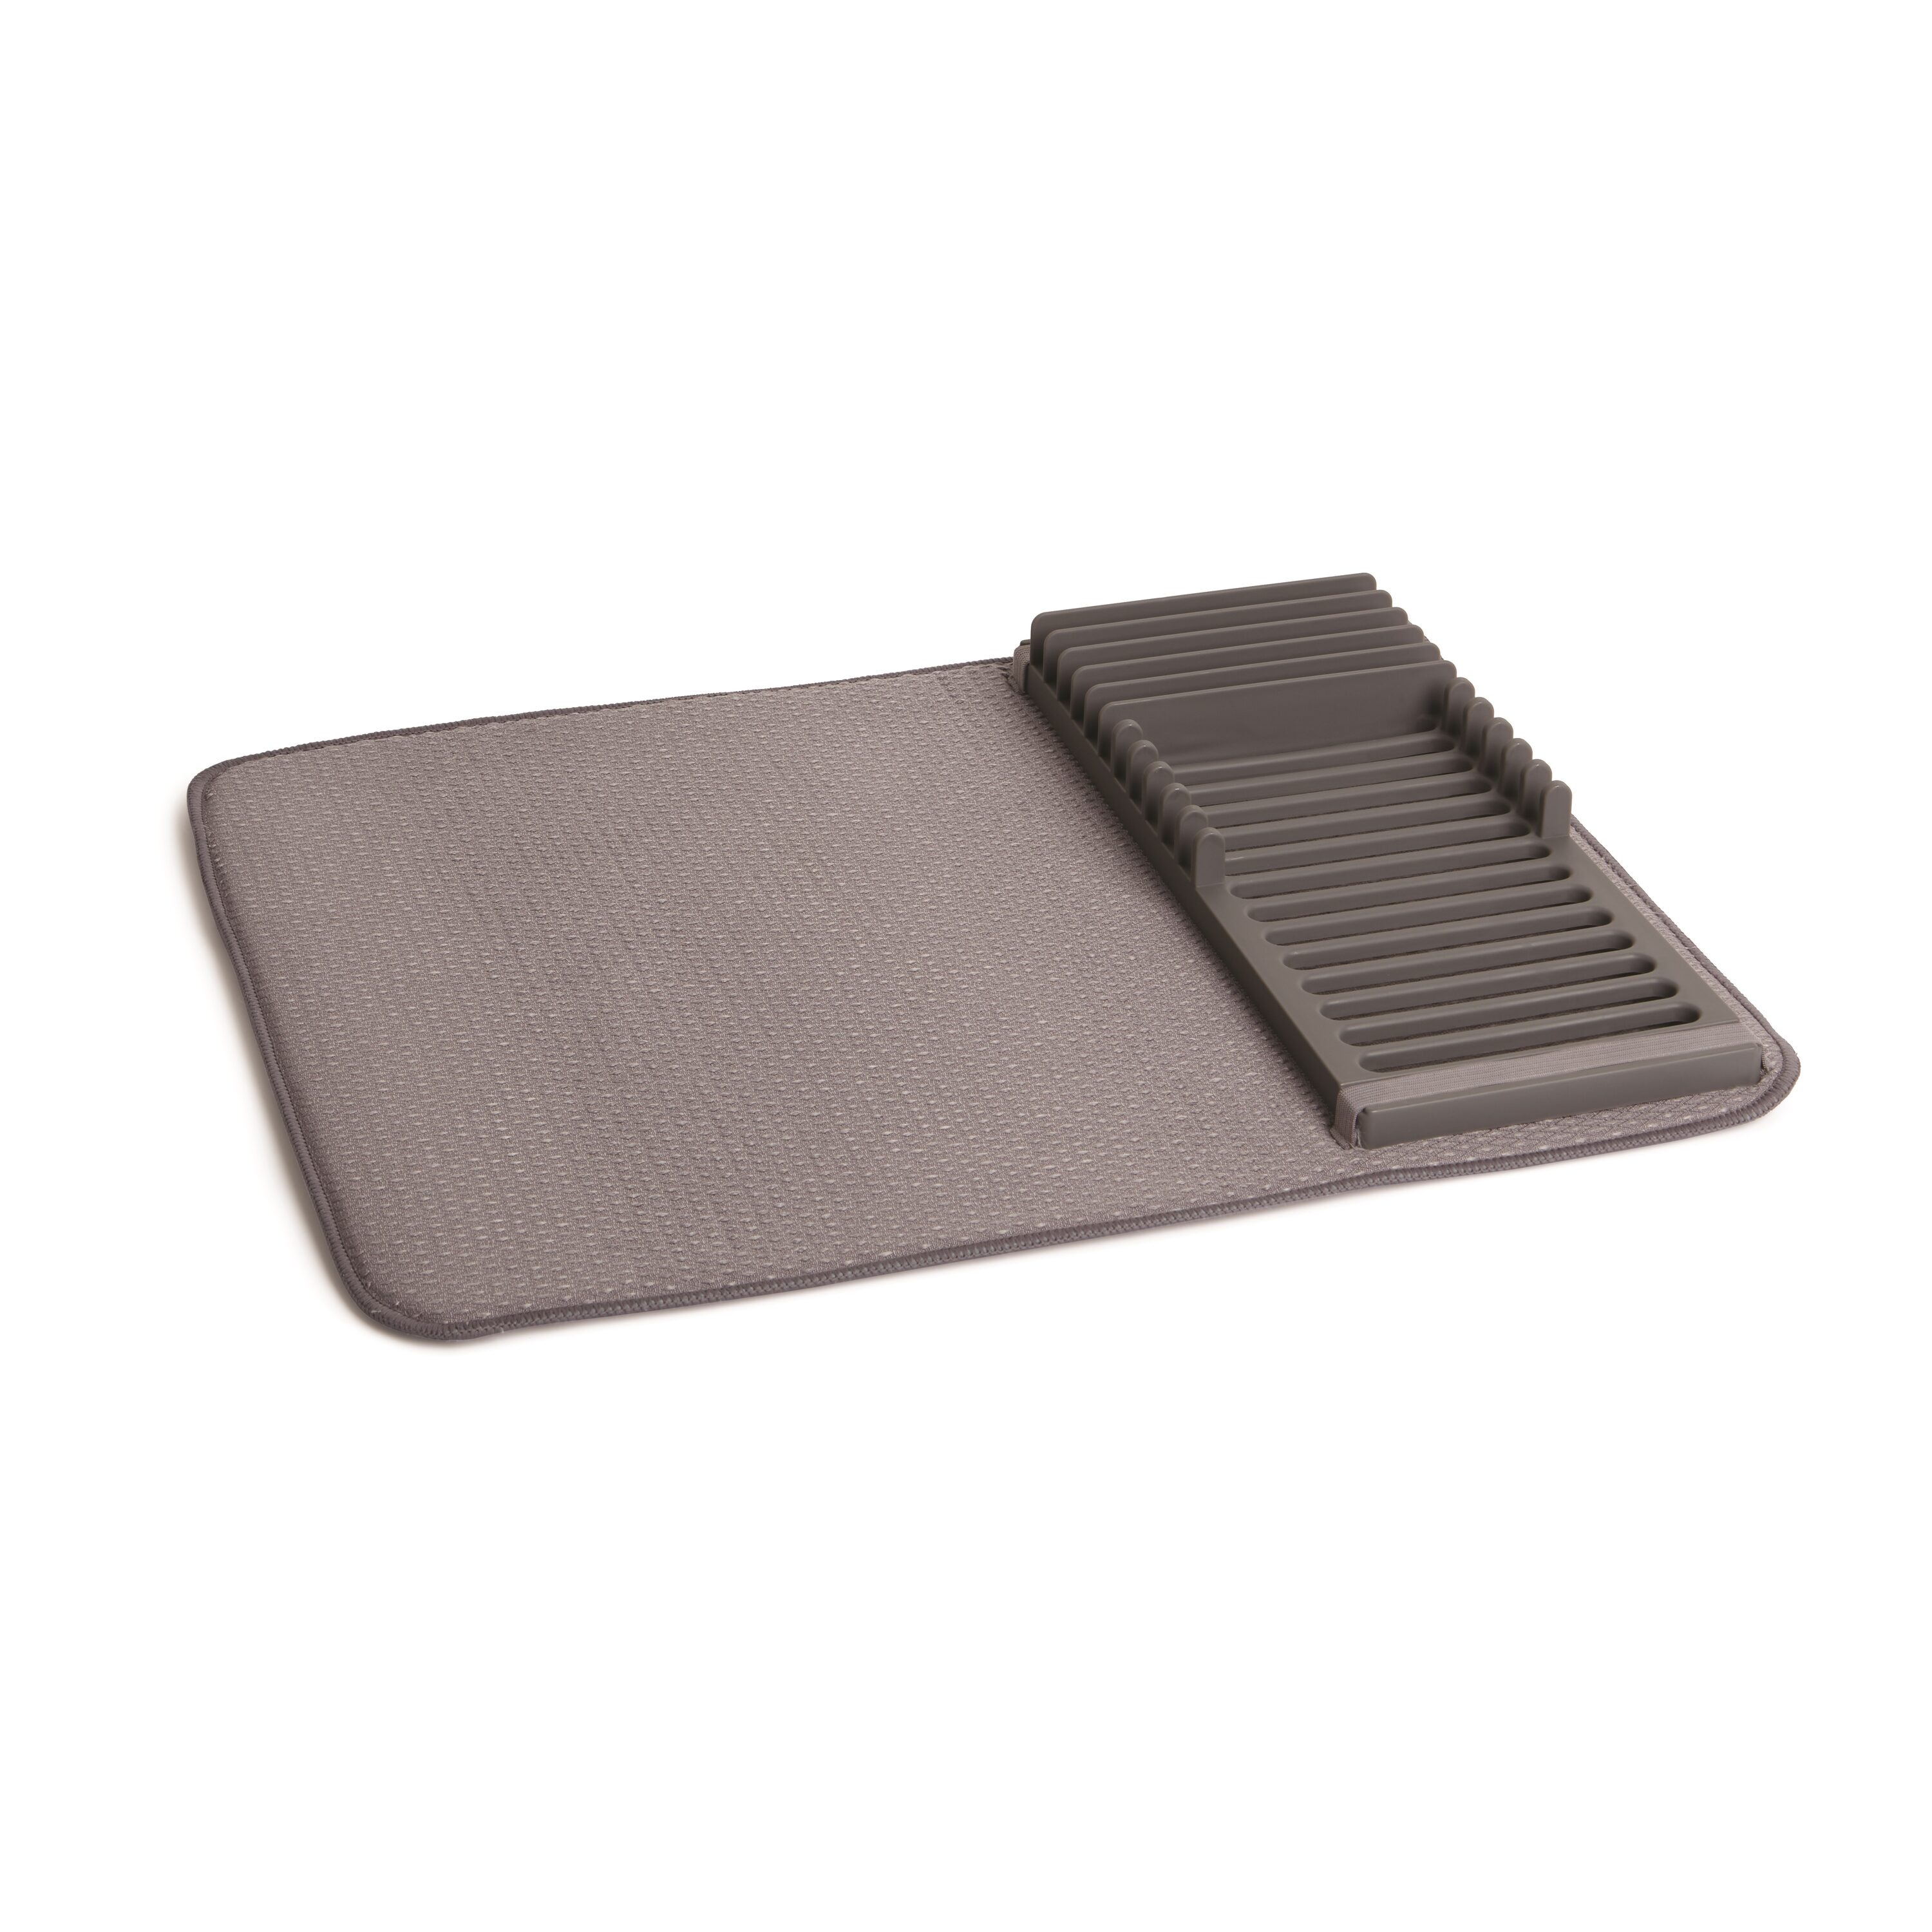 Umbra Linen Udry Folding Microfiber Dish Drying Mat by World Market